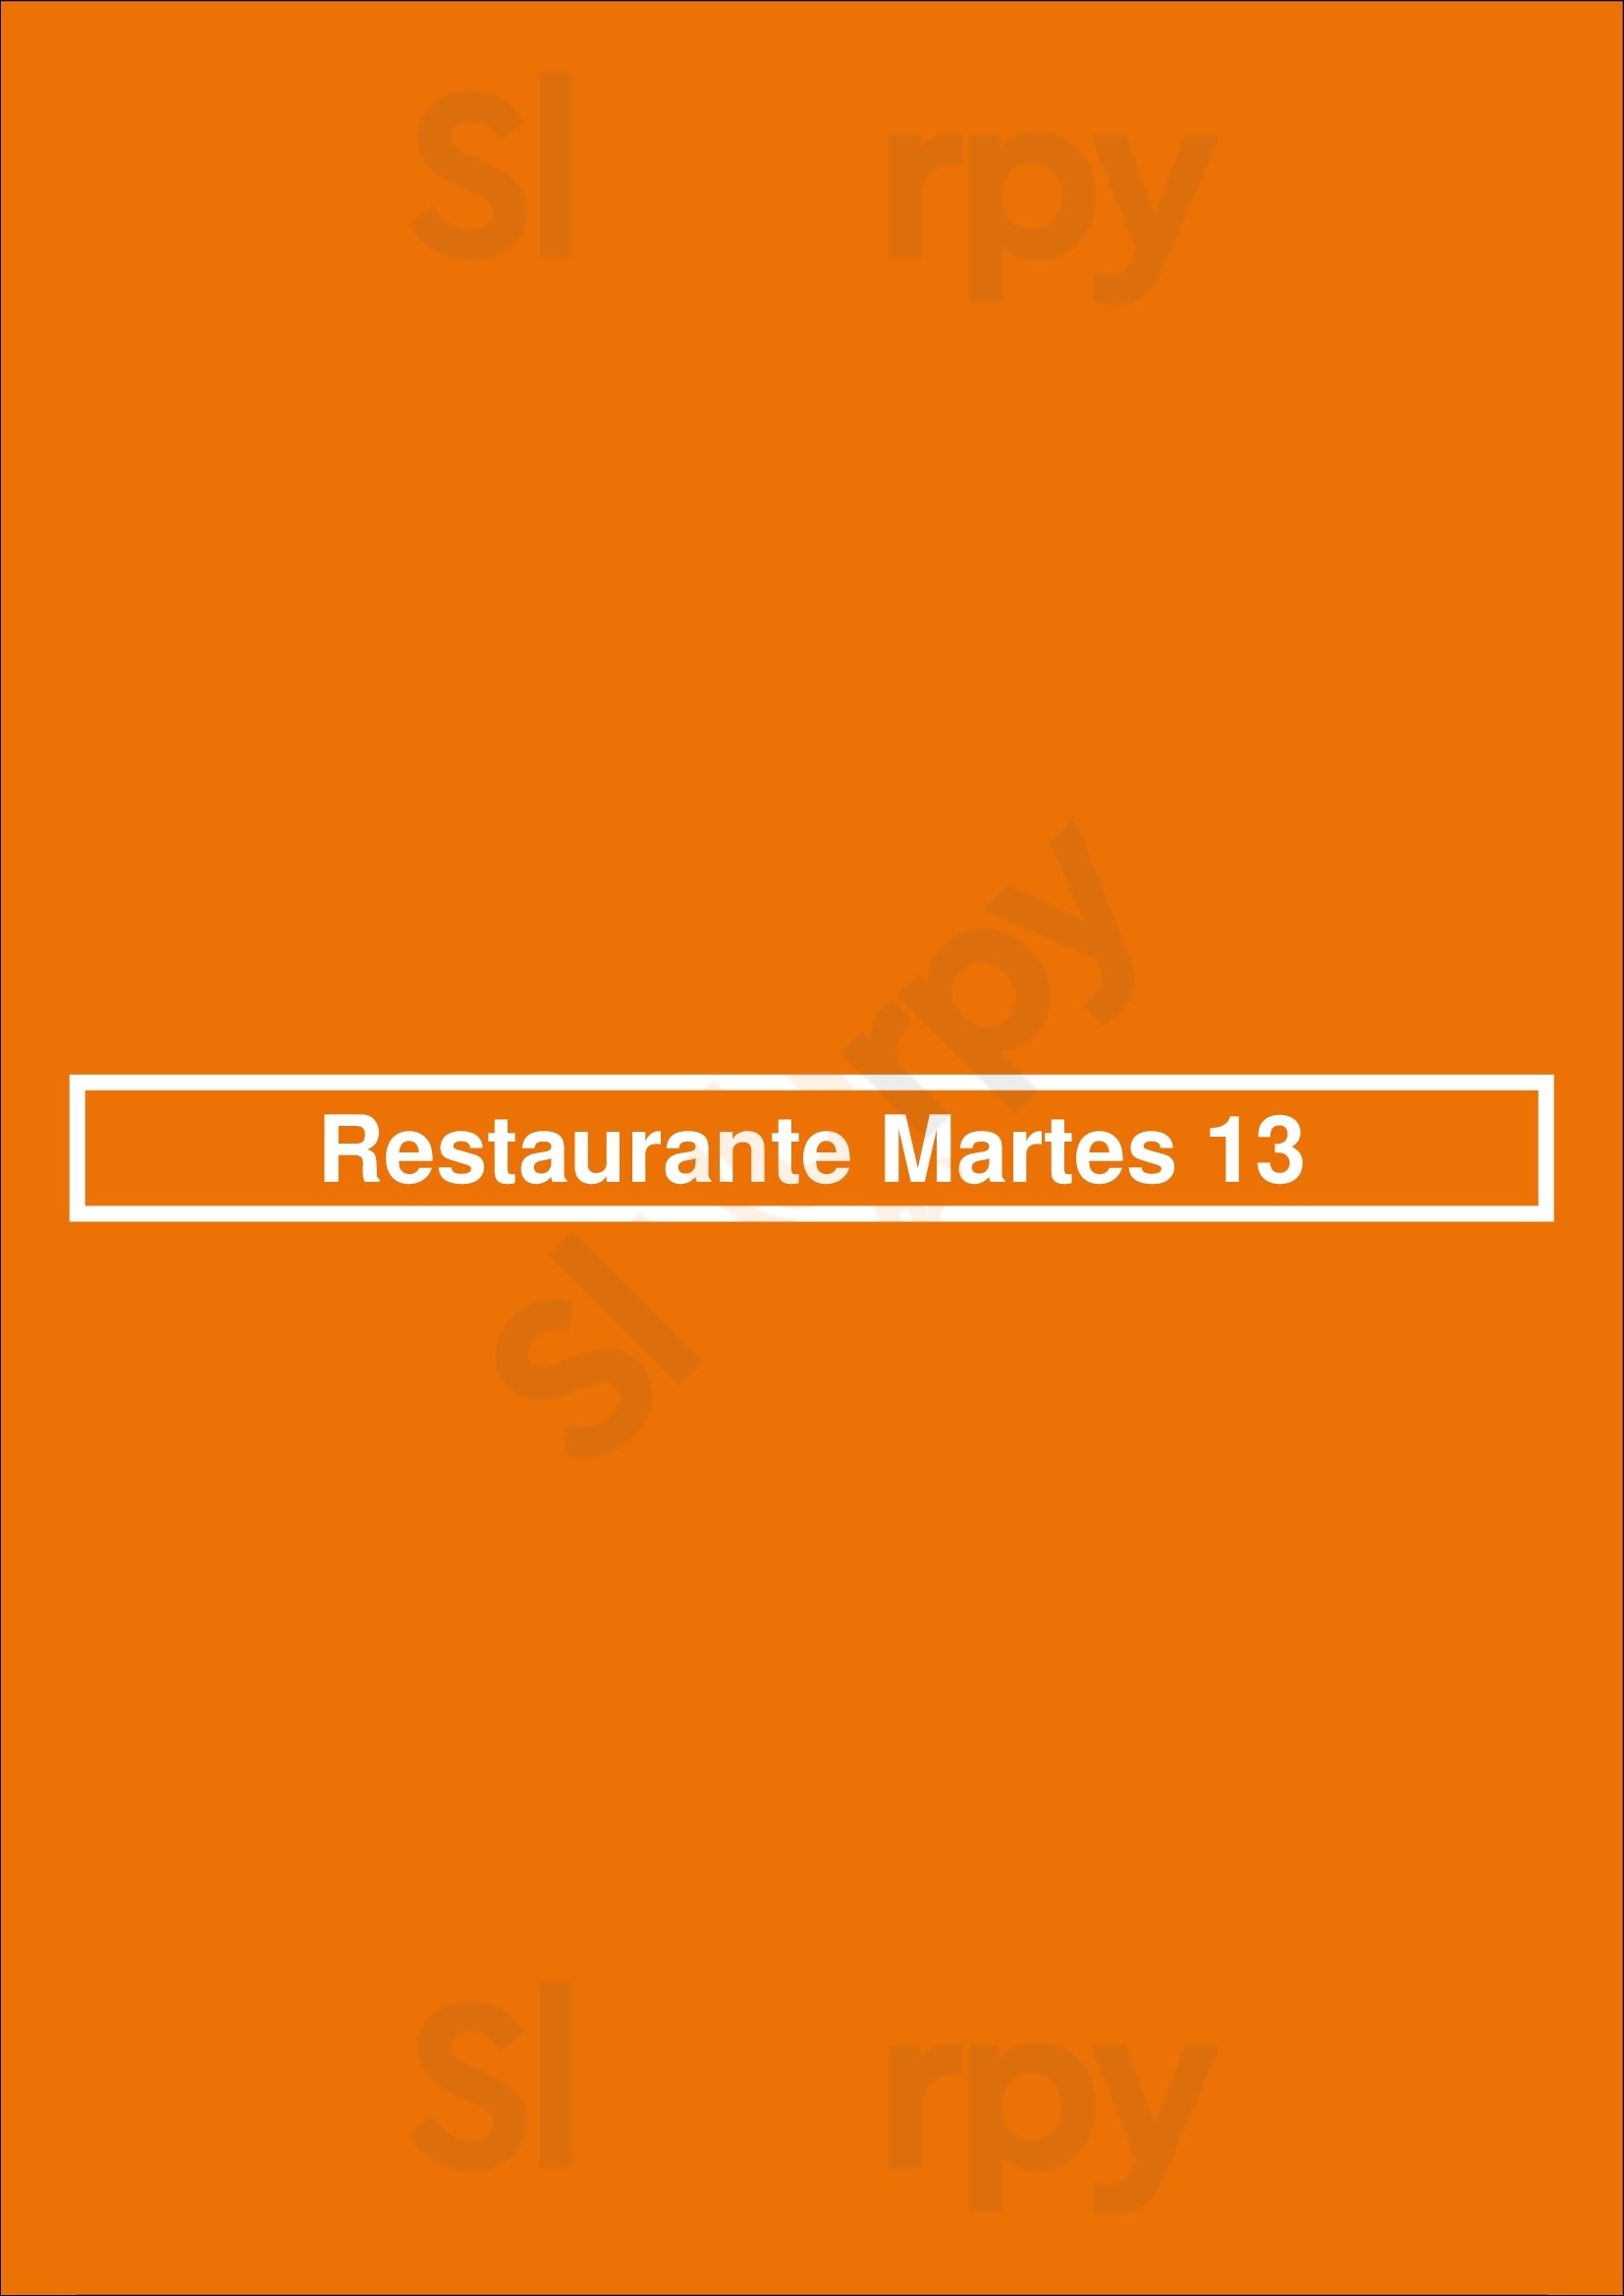 Restaurante Martes 13 Madrid Menu - 1